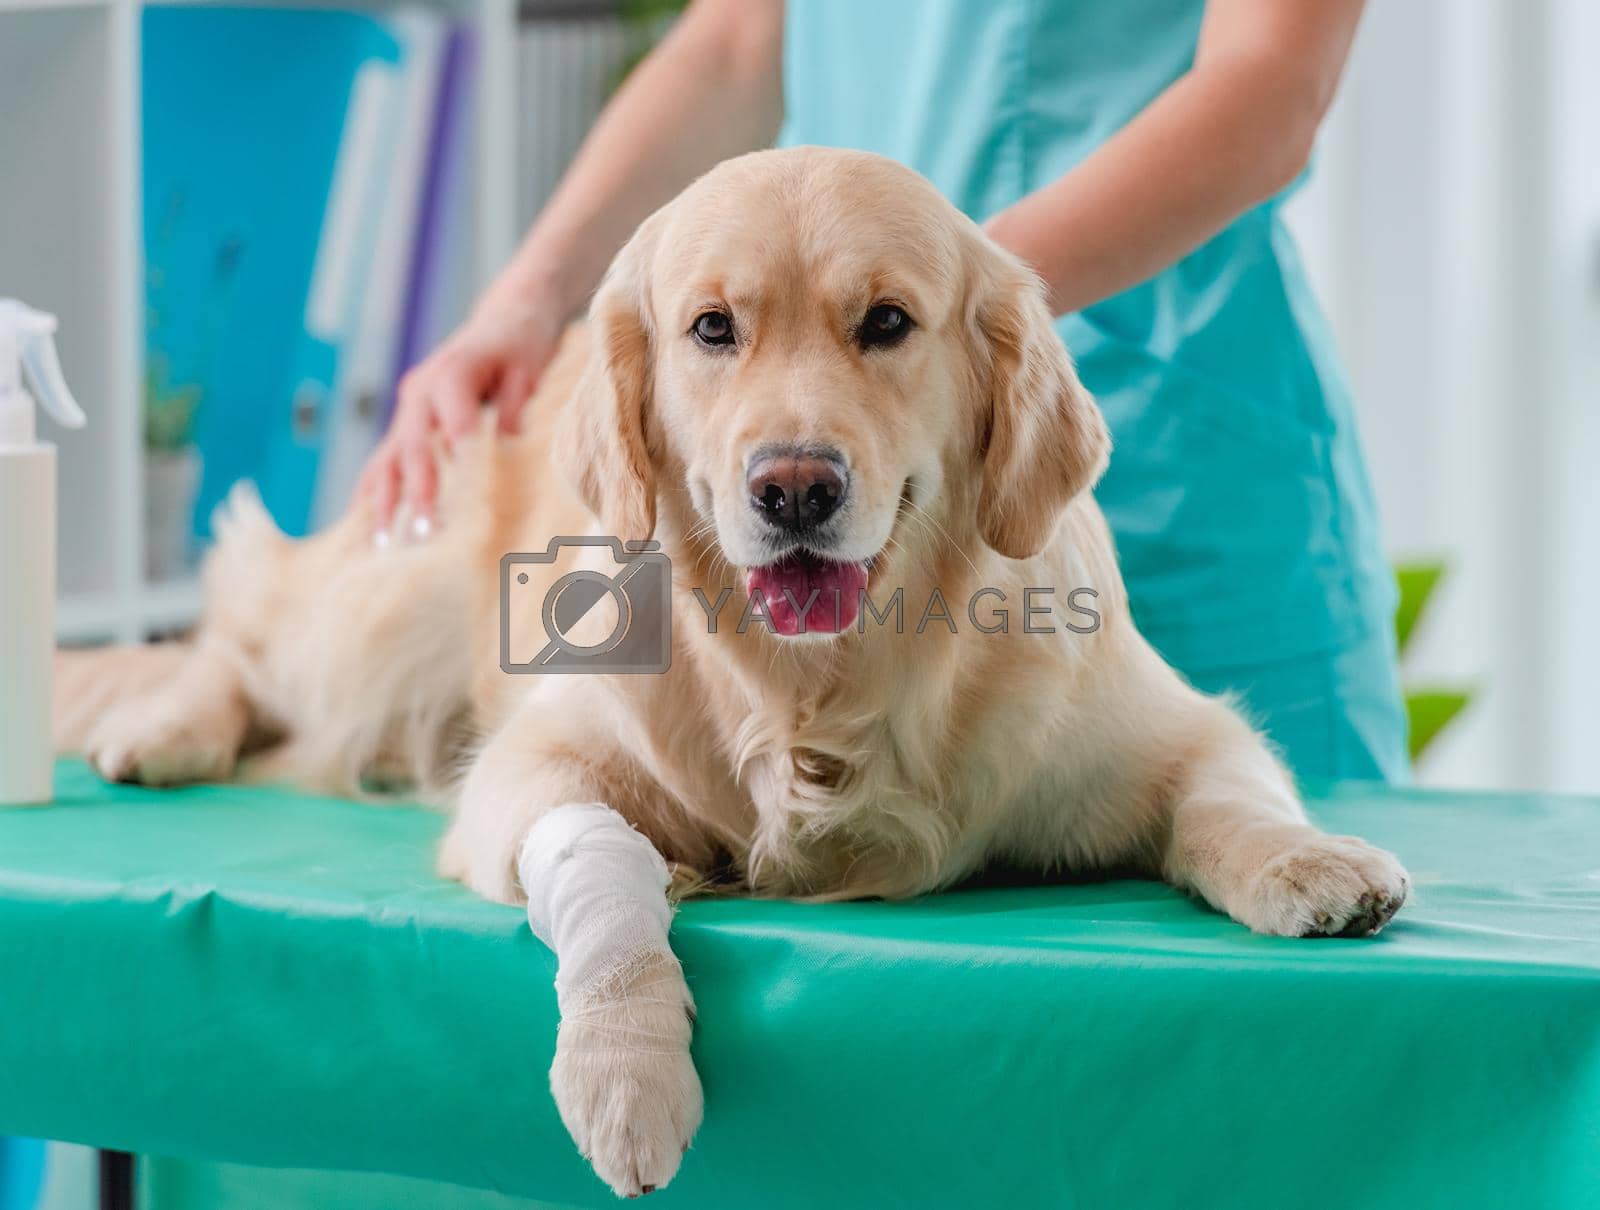 Royalty free image of Golden retriever dog examination in veterinary clinic by tan4ikk1